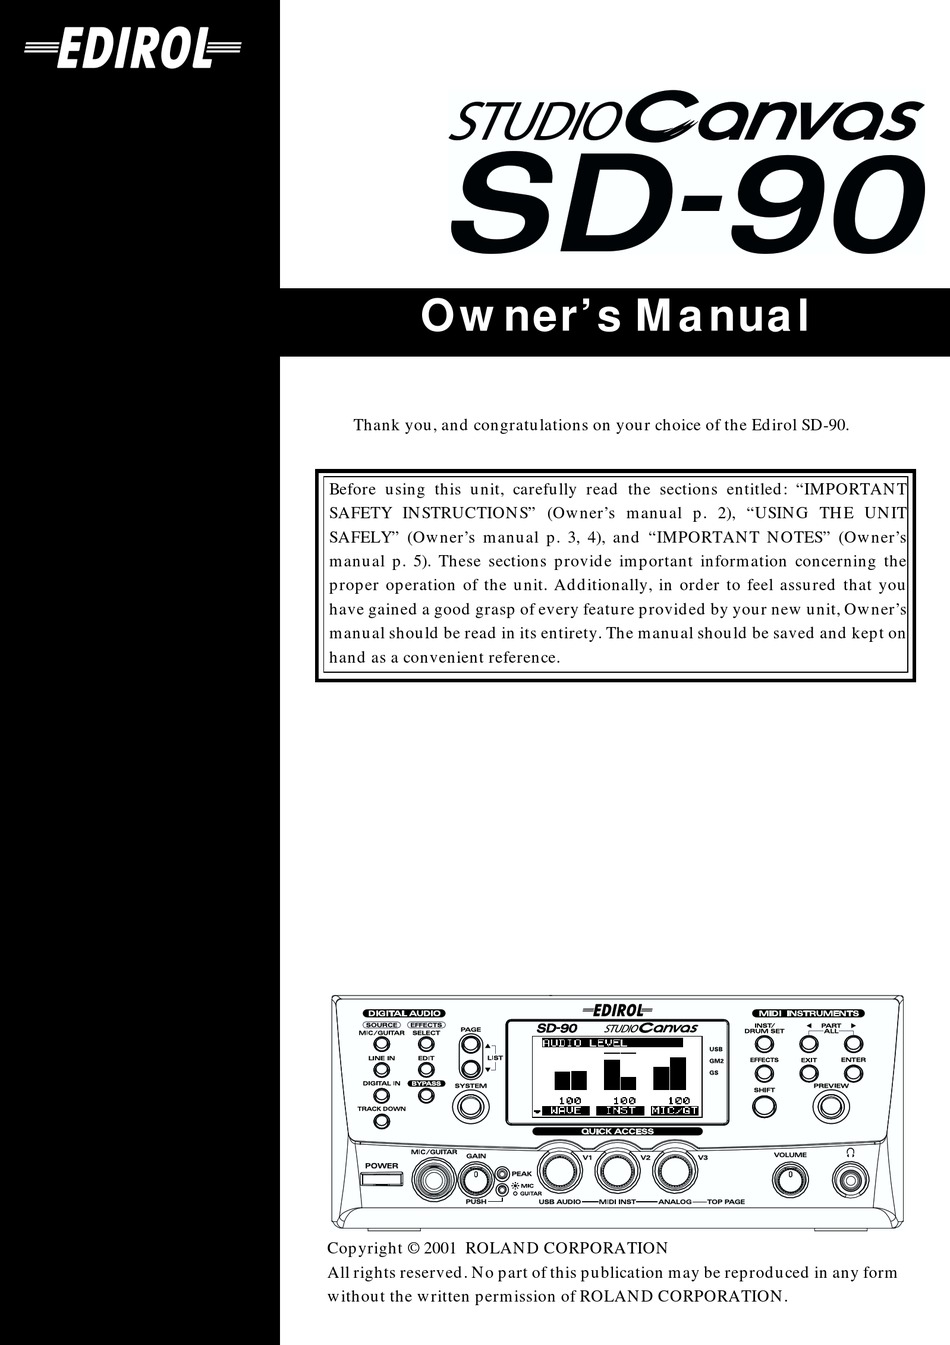 EDIROL STUDIO CANVAS SD-90 OWNER'S MANUAL Pdf Download | ManualsLib